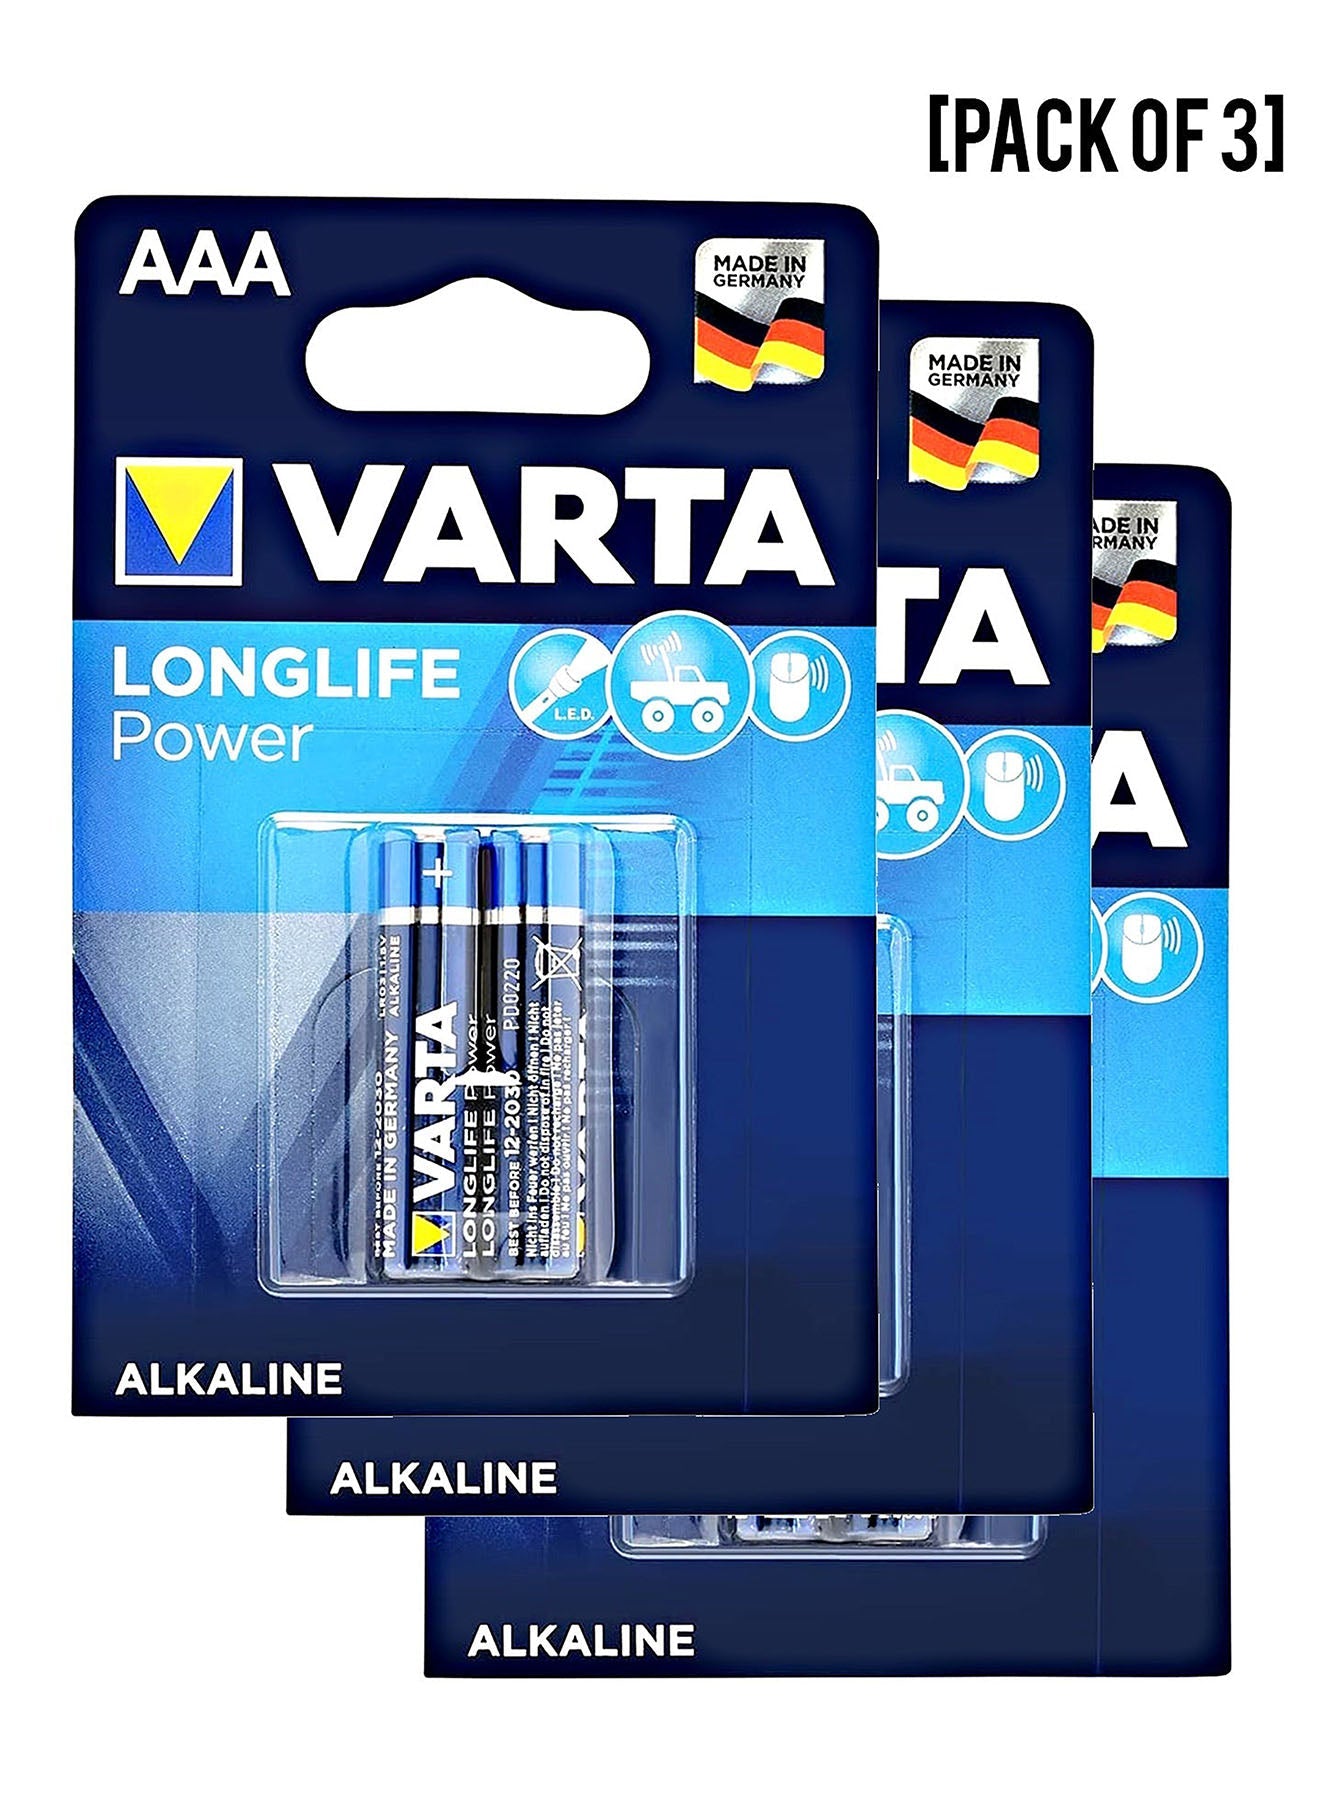 Varta Long Life Power Micro AAA LR03 Batteries 2 Units Value Pack of 3 